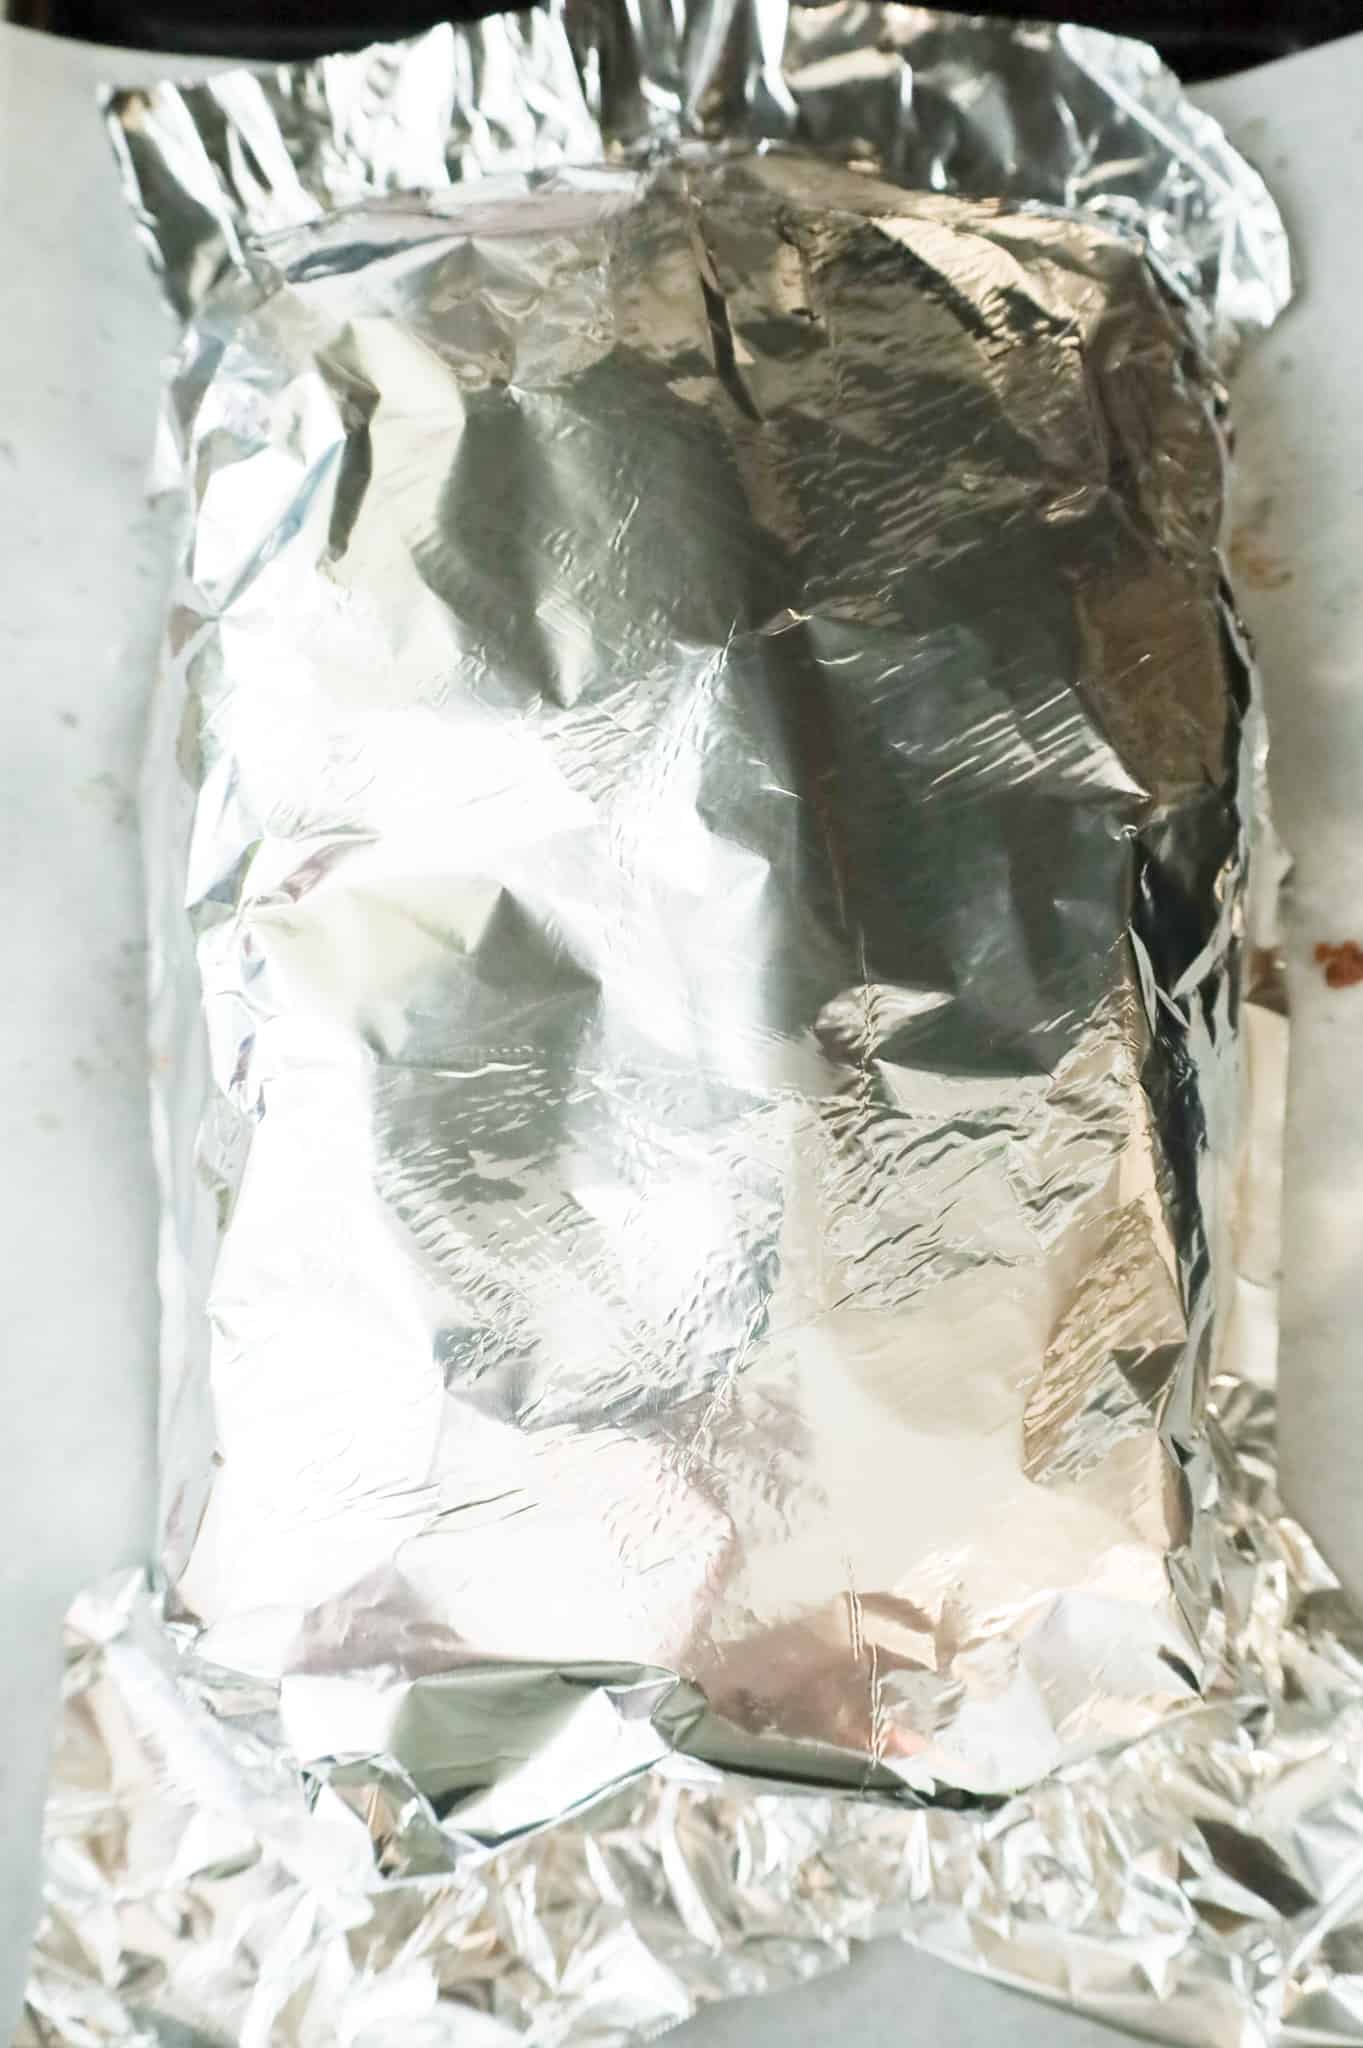 aluminum foil covering sliders on a baking sheet